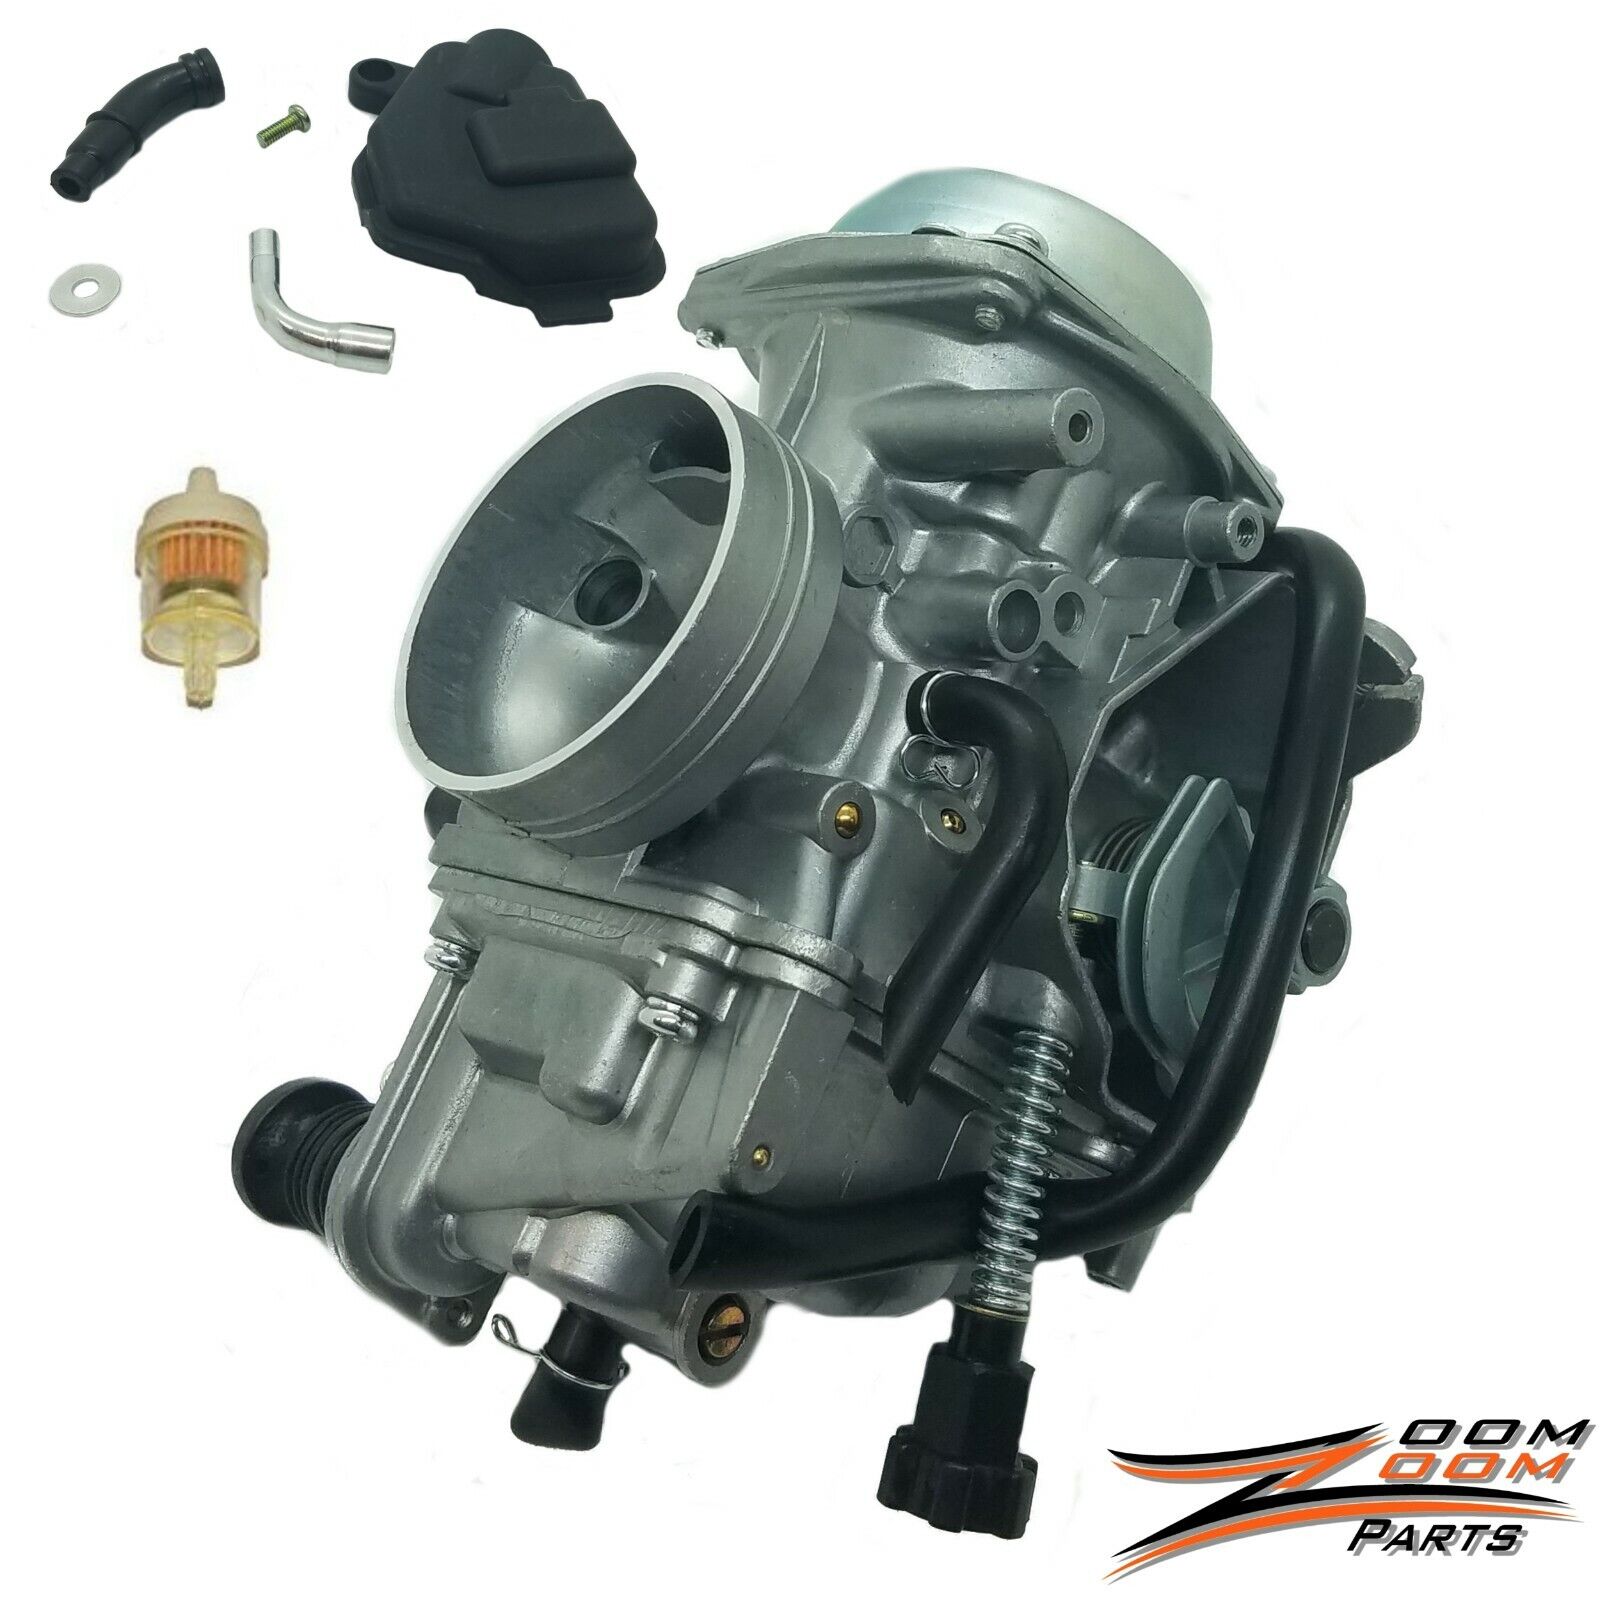 Carburetor For Fits Honda Trx 300 1988 - 2000 TRX300 Fourtrax Carb